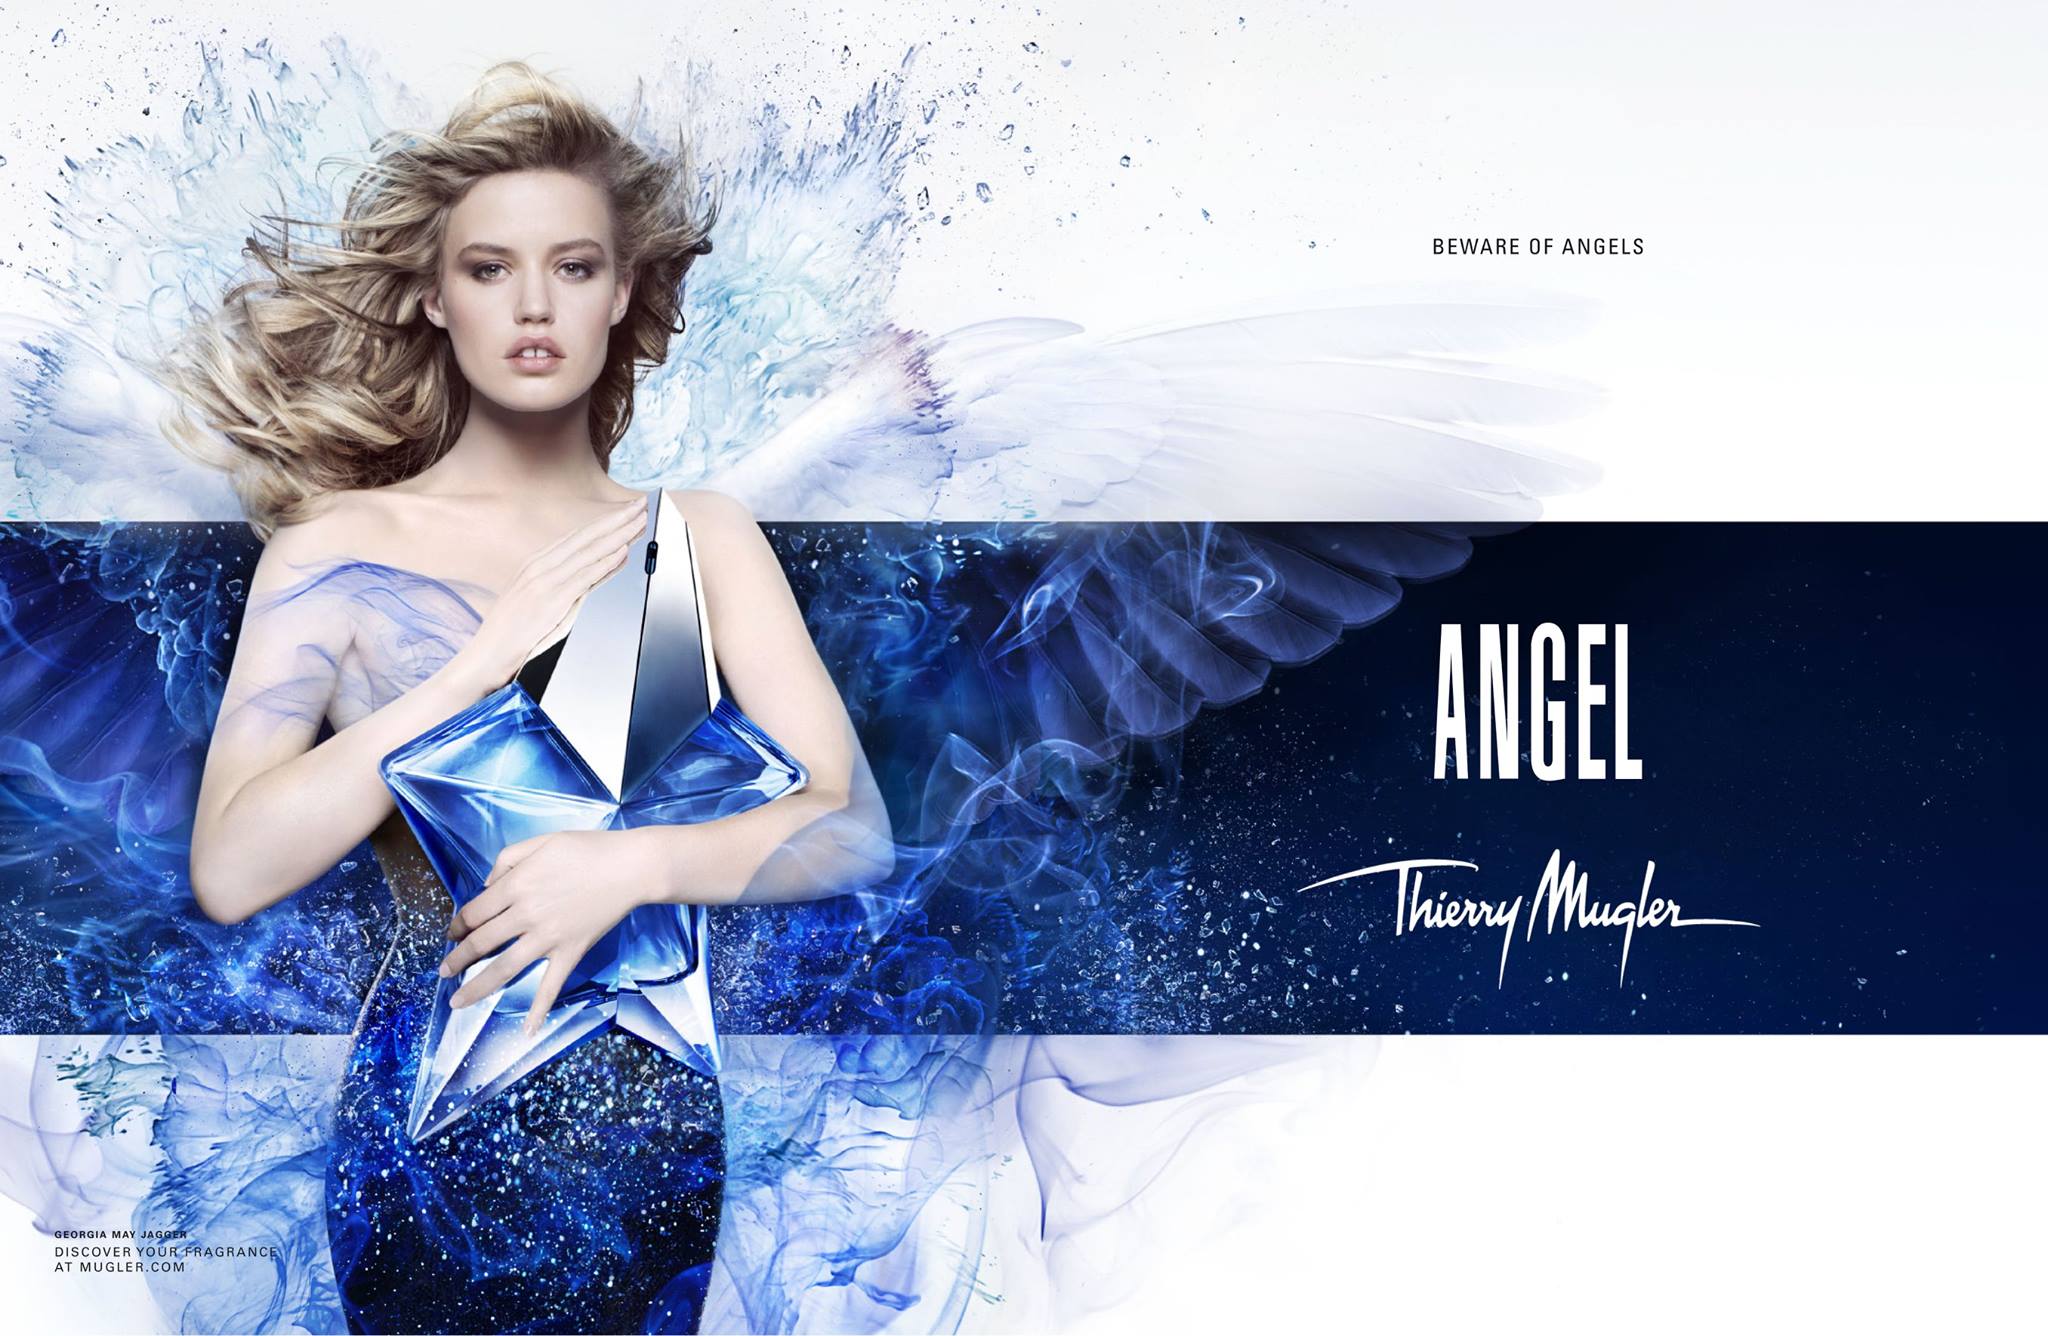 thierry-muglers-perfume-angel-perfume-angel-print-361902-adeevee